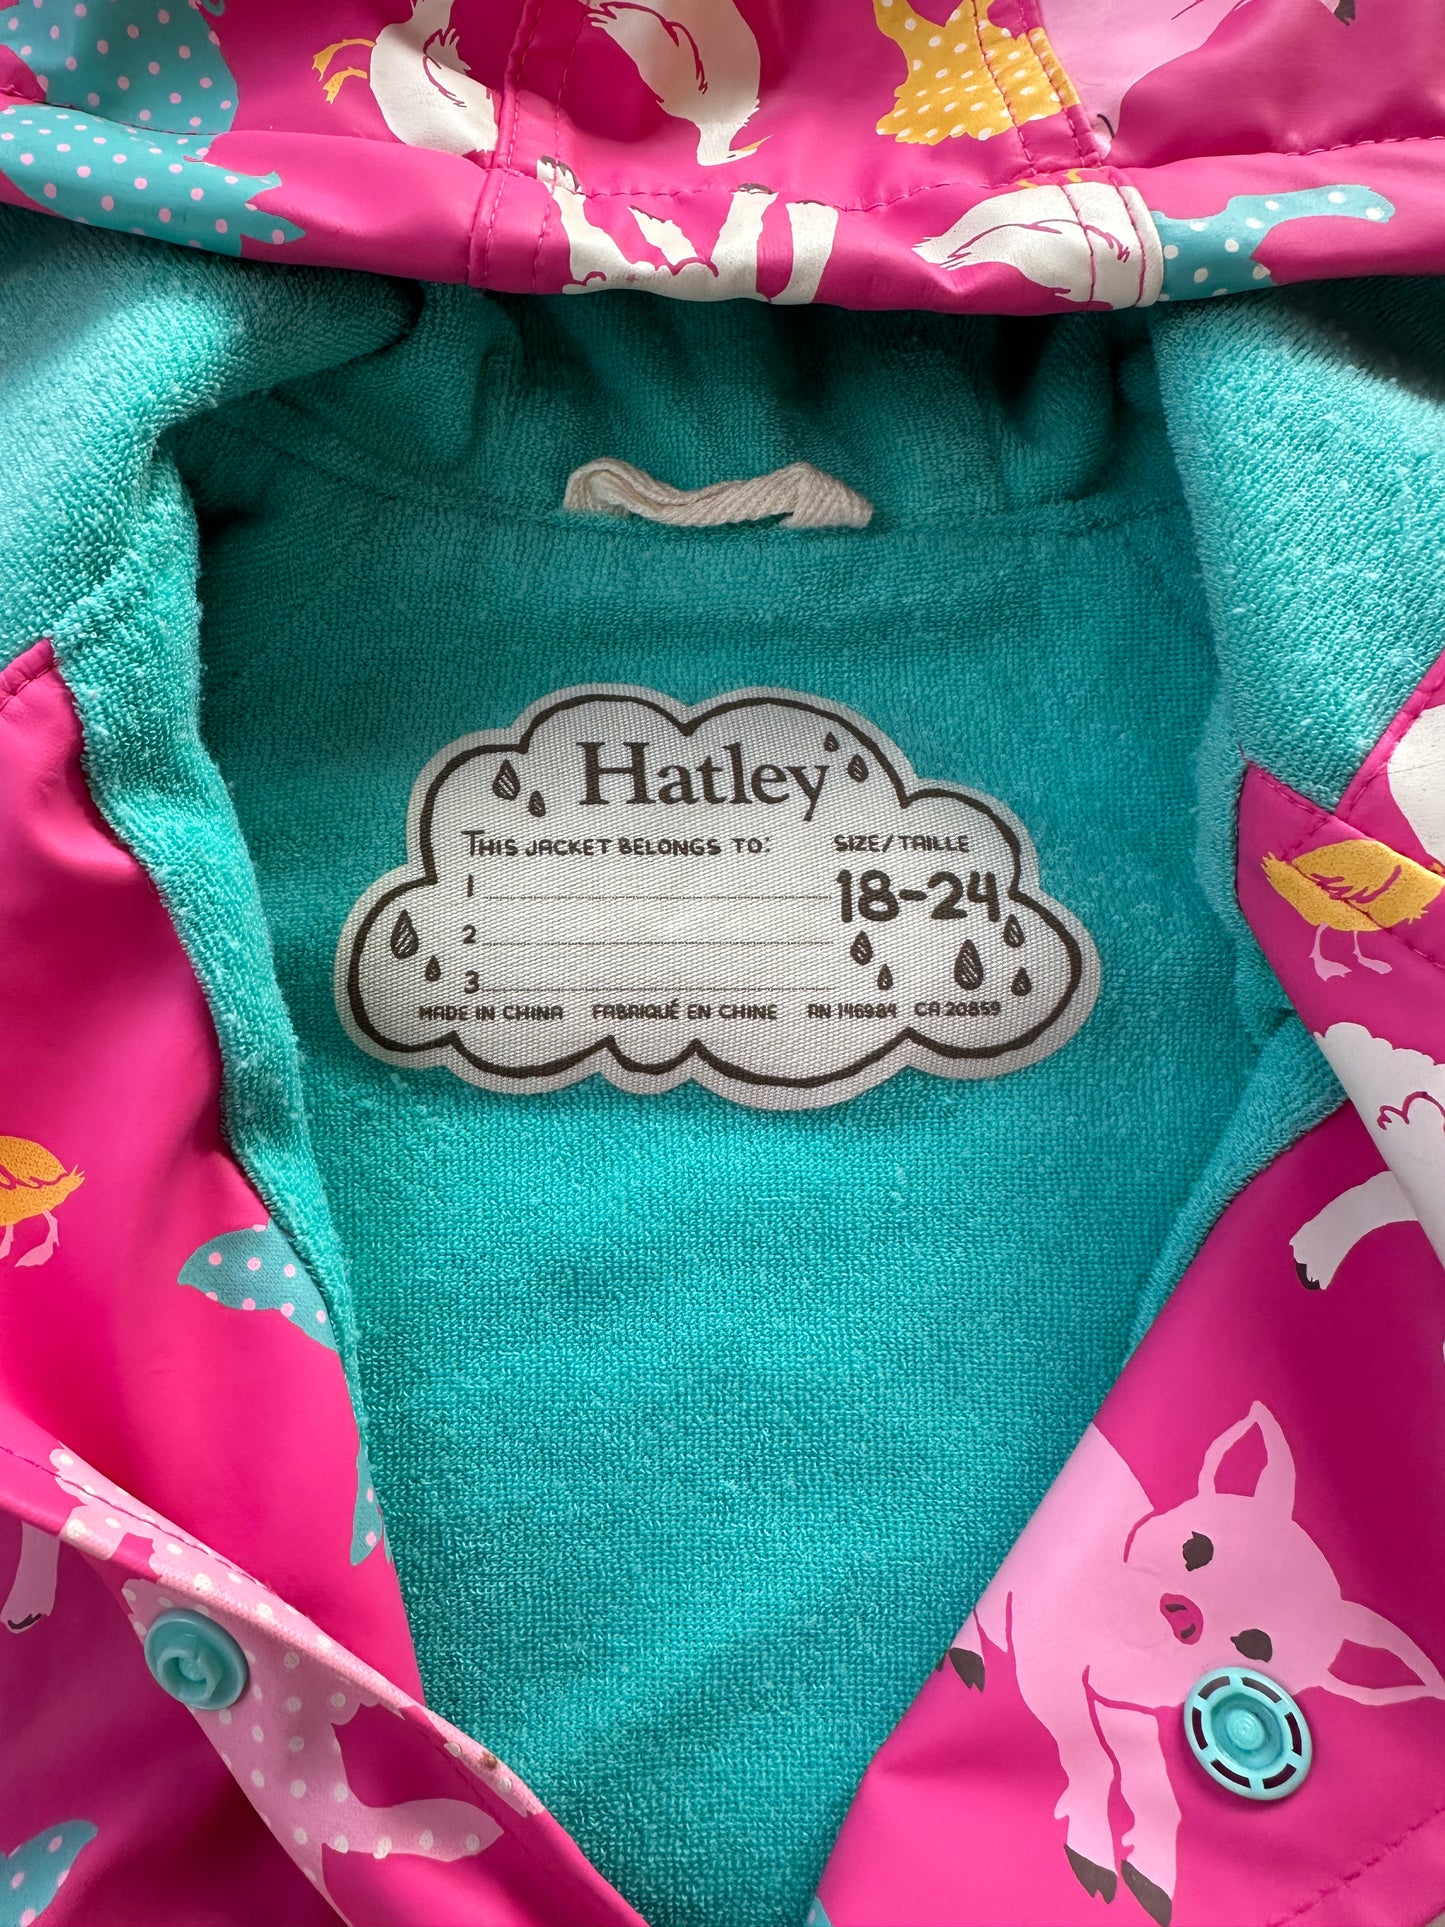 Hatley Girl 18-24 months Lined Rain Jacket